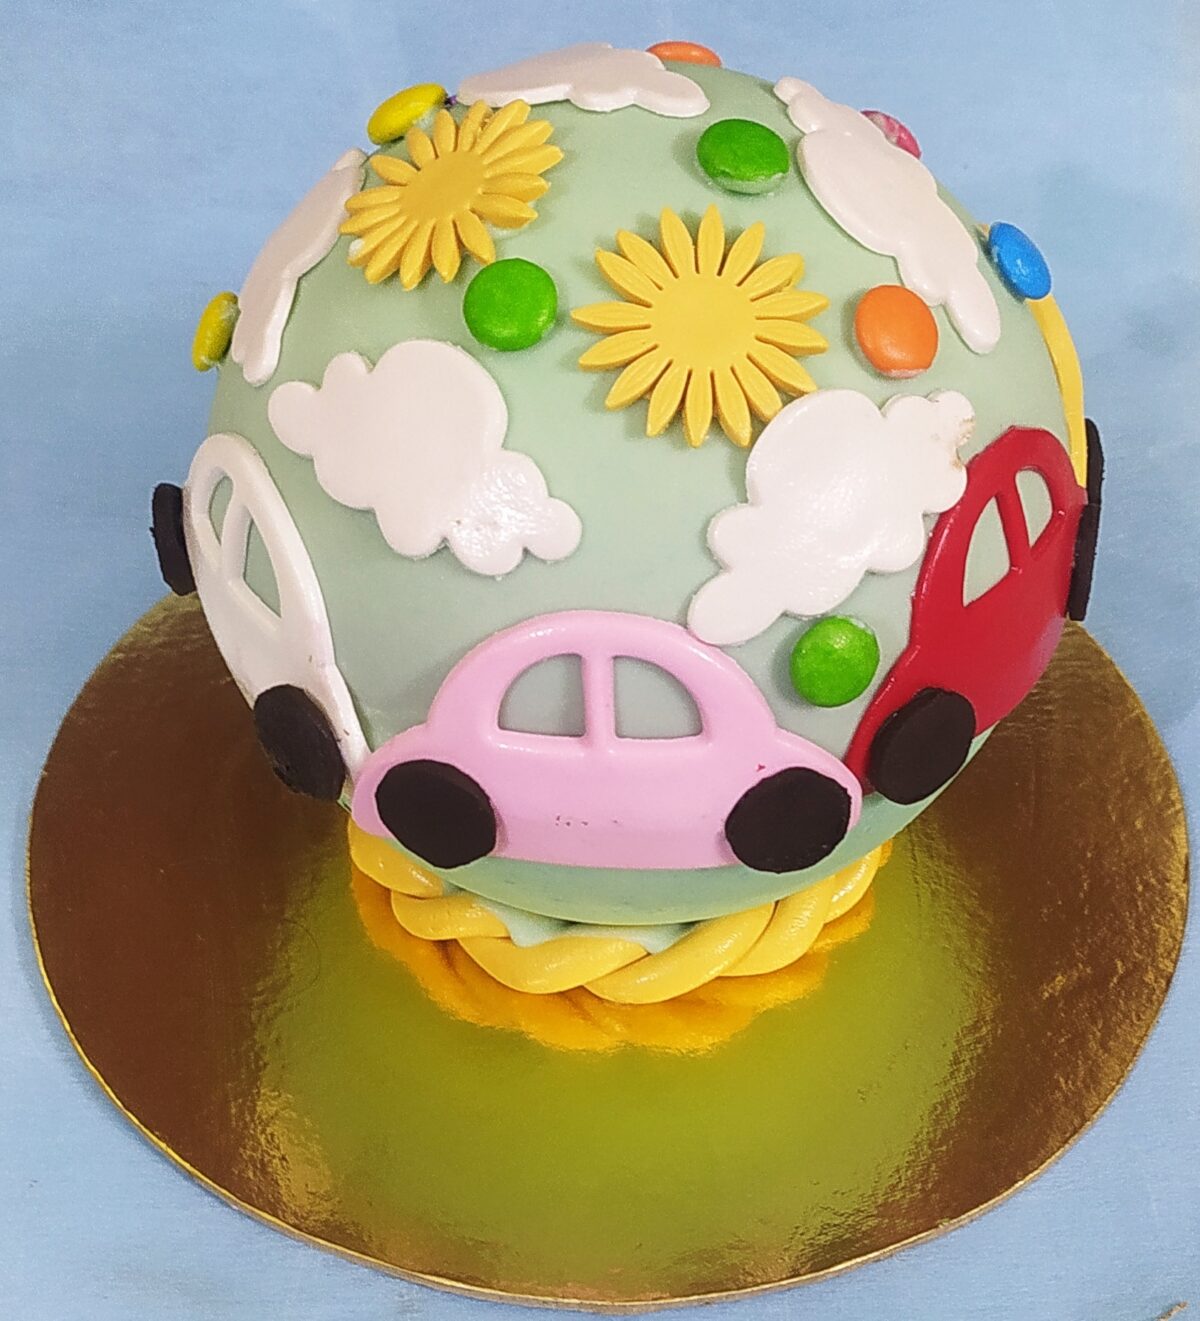 ball shape pinata cake with fondant designs